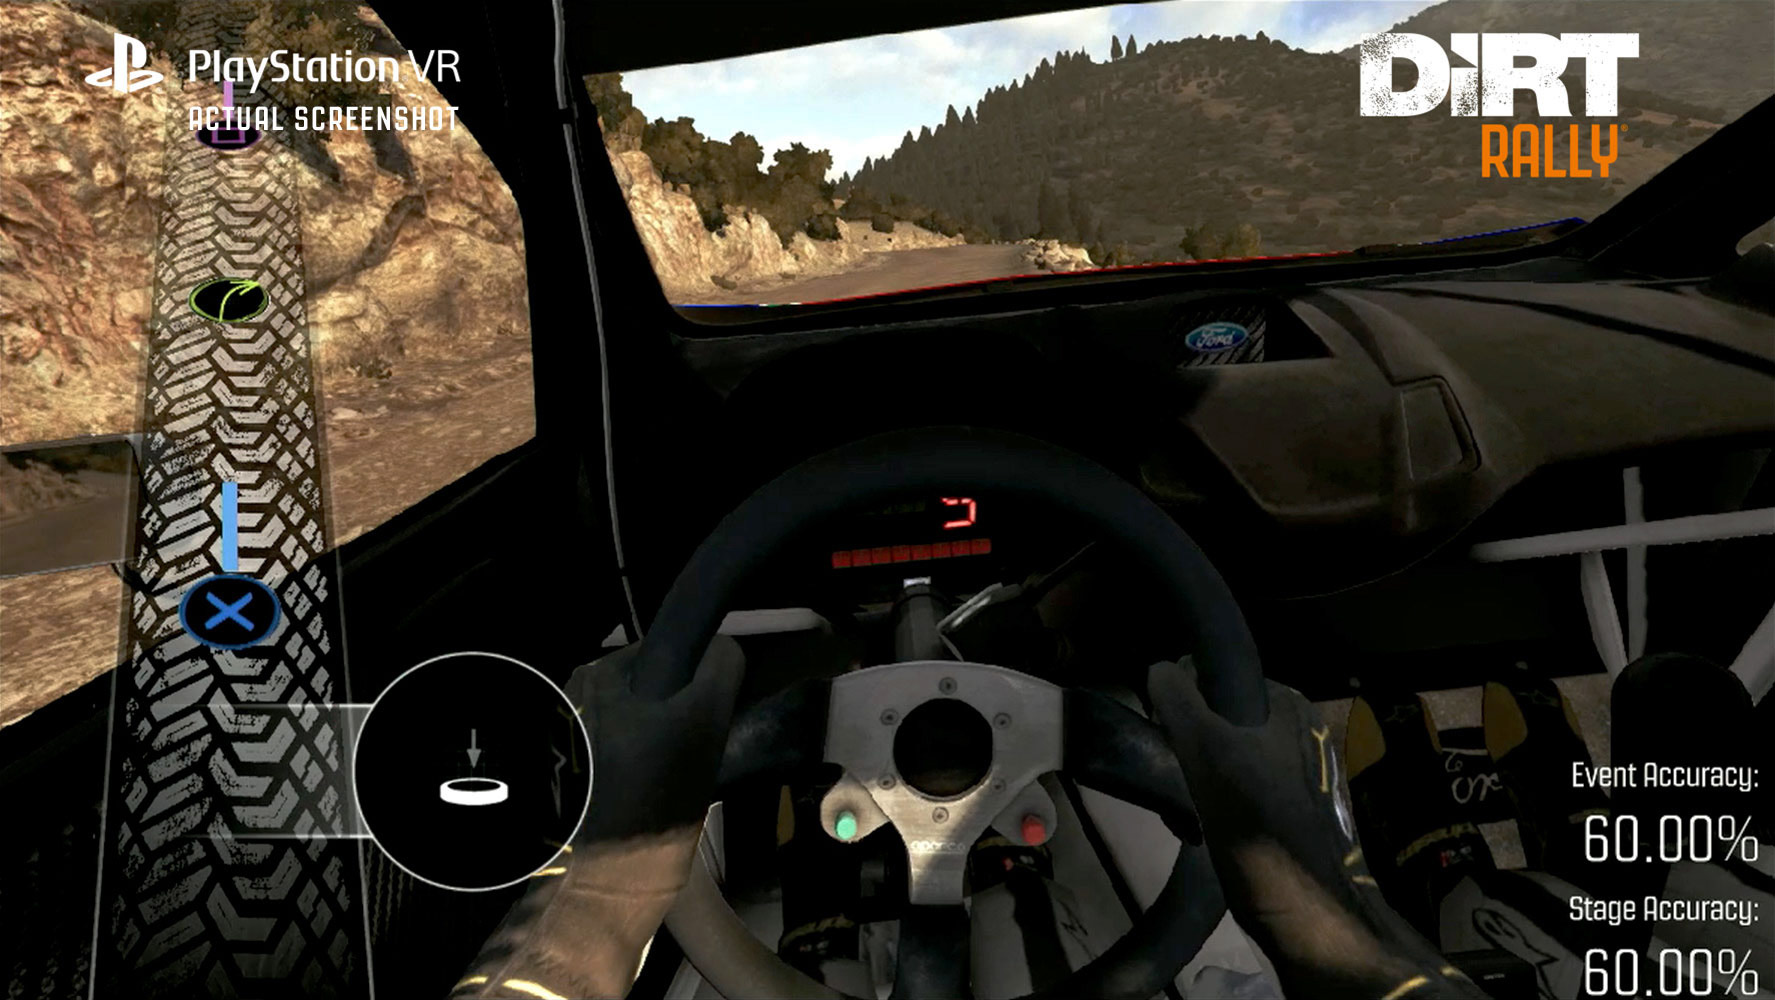 Dirt vr. Dirt Rally VR. Dirt Rally 1.0 системные требования. Dirt Rally 2015 системные требования. Dirt Rally системные требования.